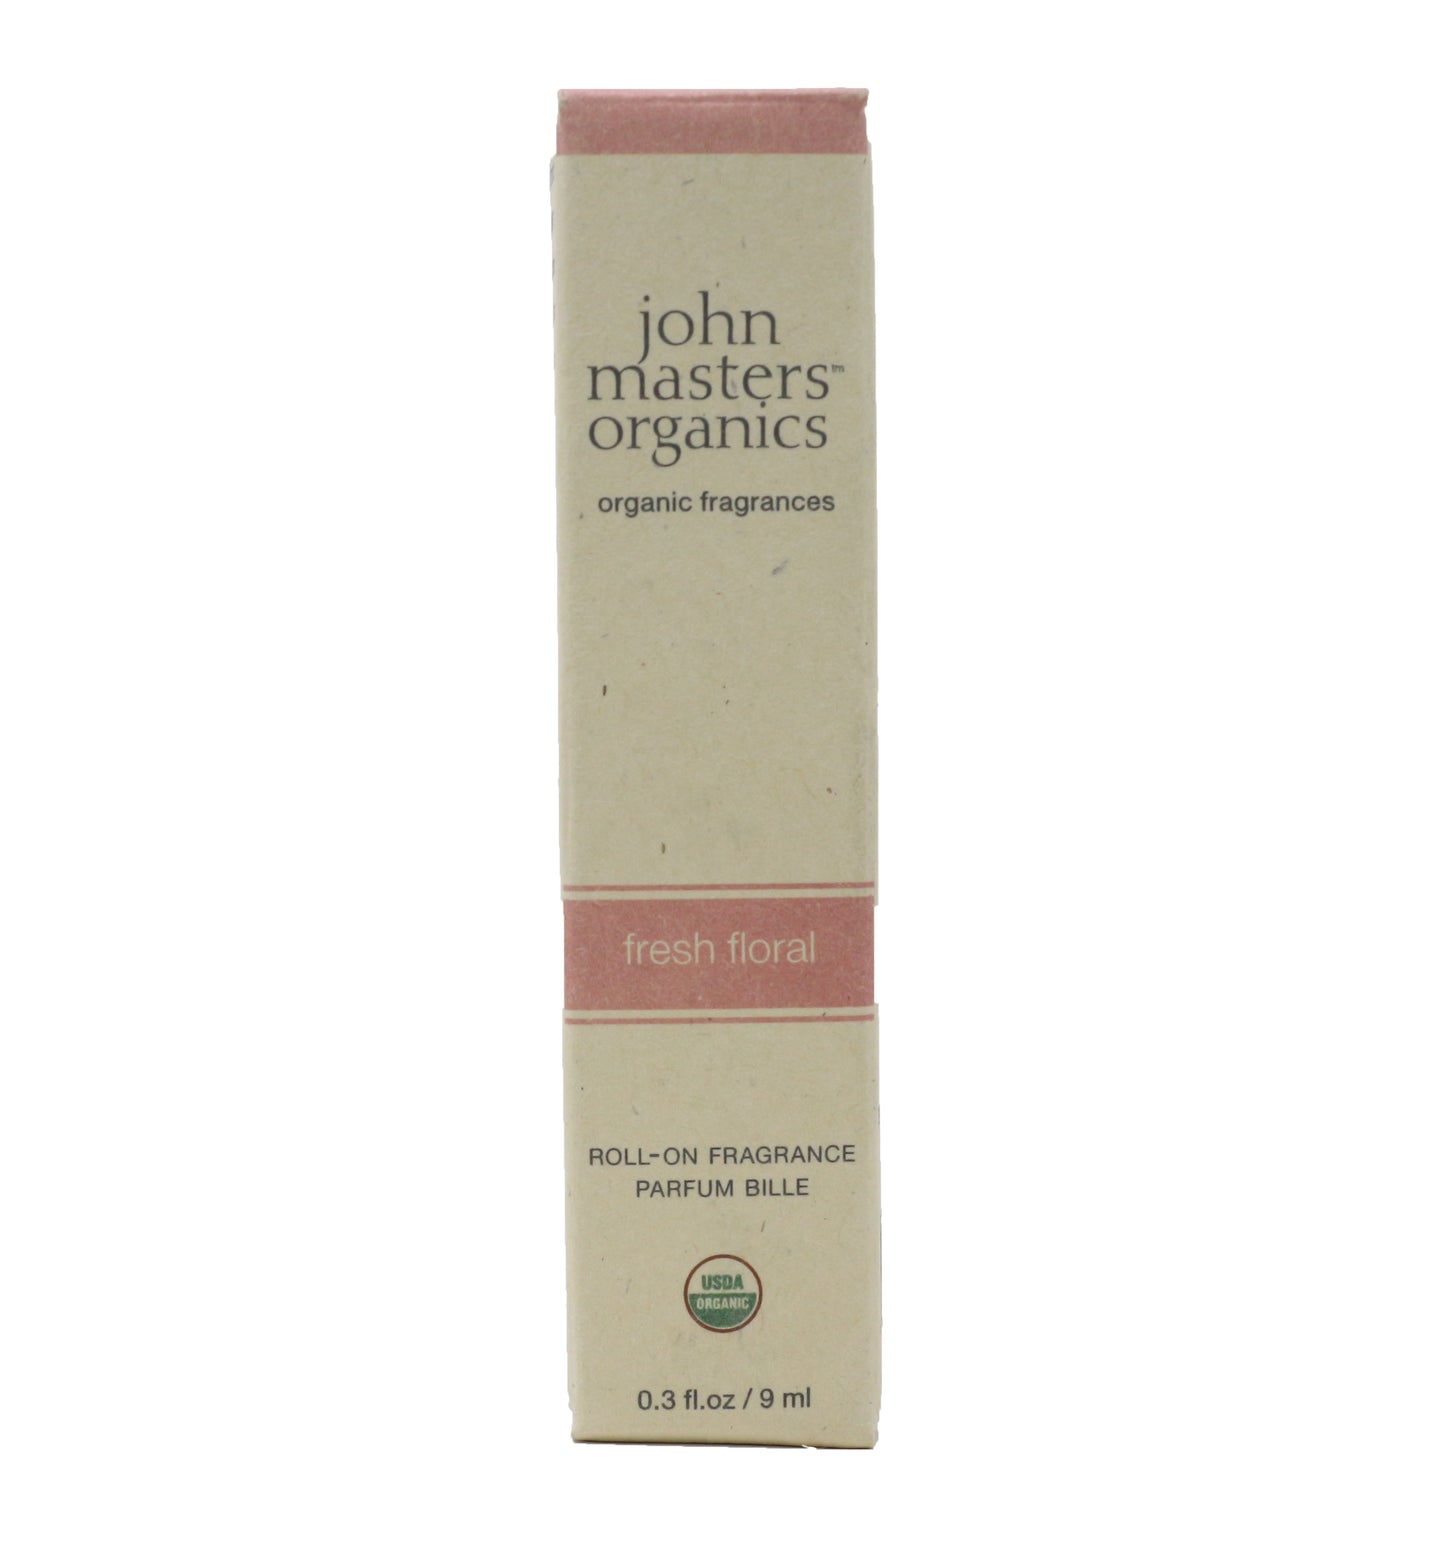 John Masters Organics Roll-On Fragrance 'Fresh Floral' 0.3oz/9ml New In Box